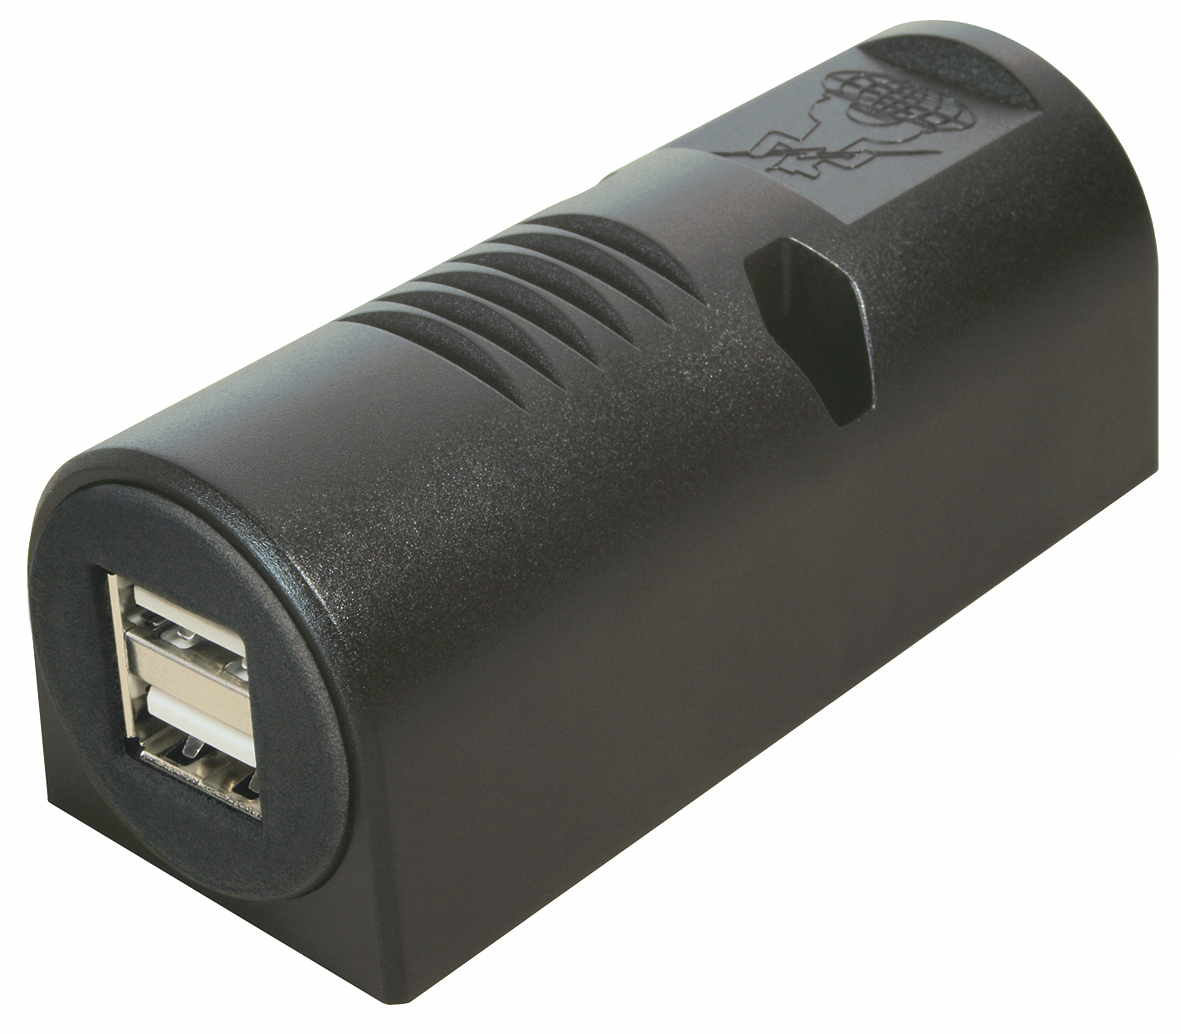 USB virtarasia 8-34V 2x2,5A lhdt max 4,4A pinta-asennus